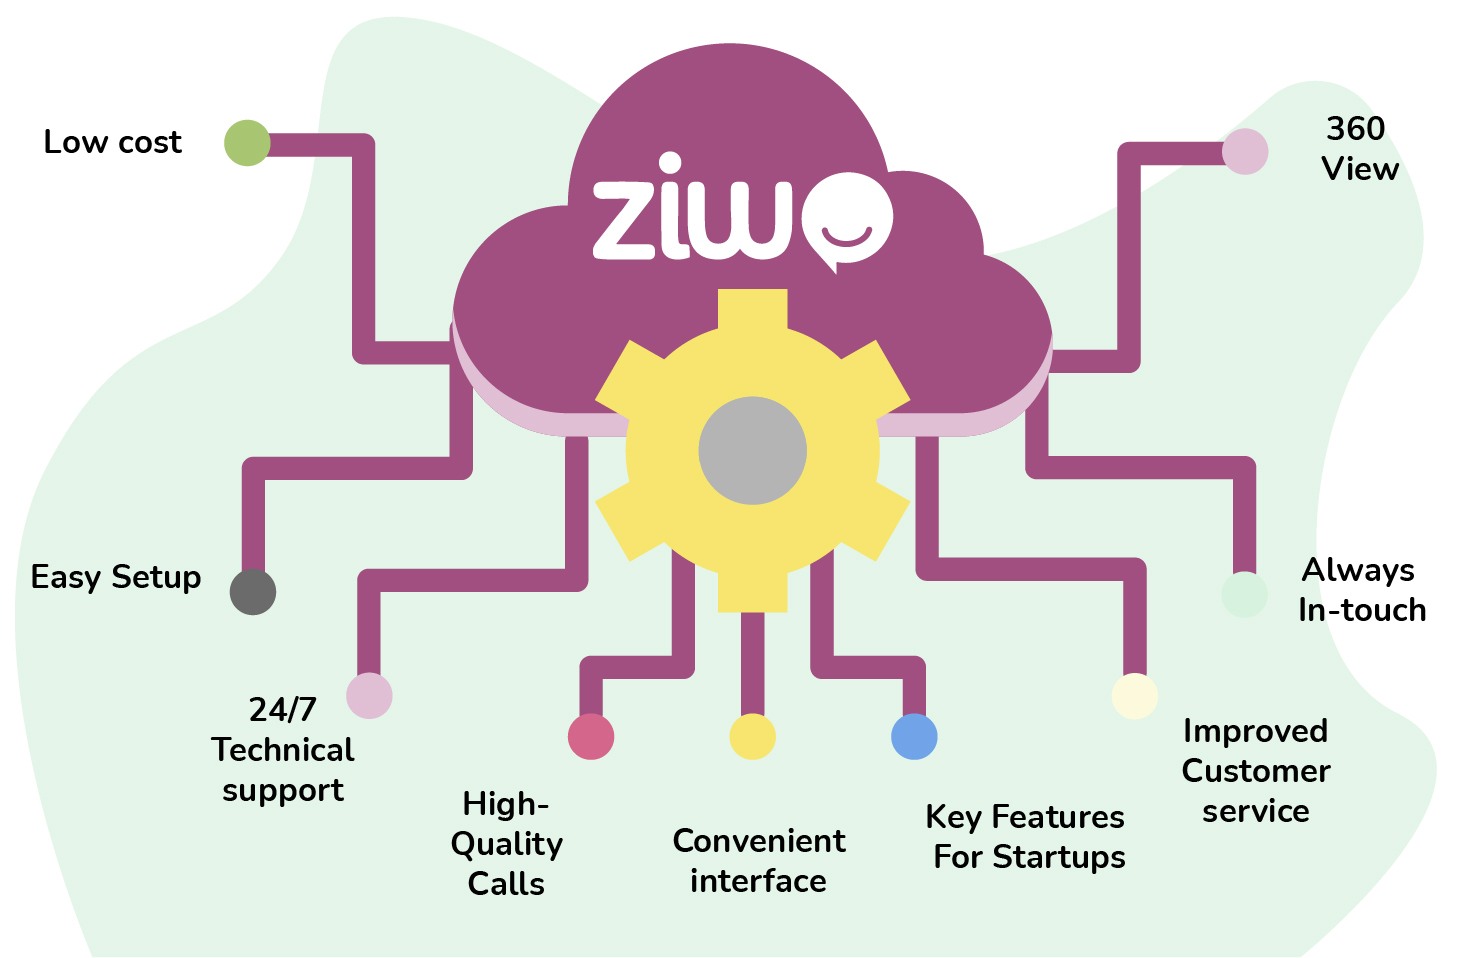 Image of the Ziwo Cloud call center Platform logo, featuring a cloud with the word 'Ziwo' written inside it.